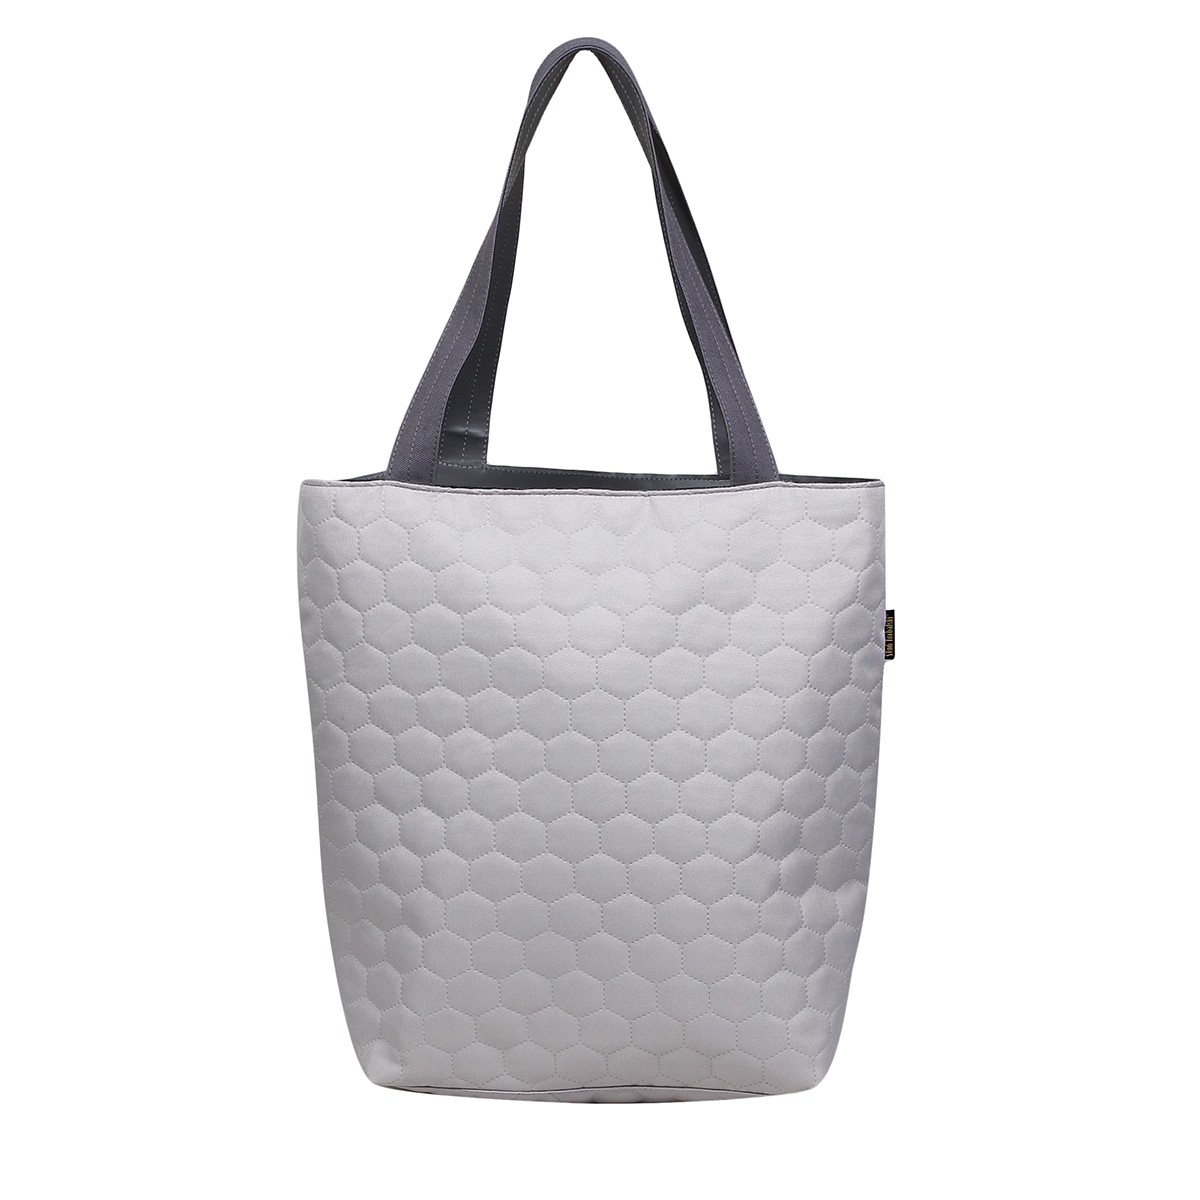 aspect clip Useless leather handbag shopper bag Bona